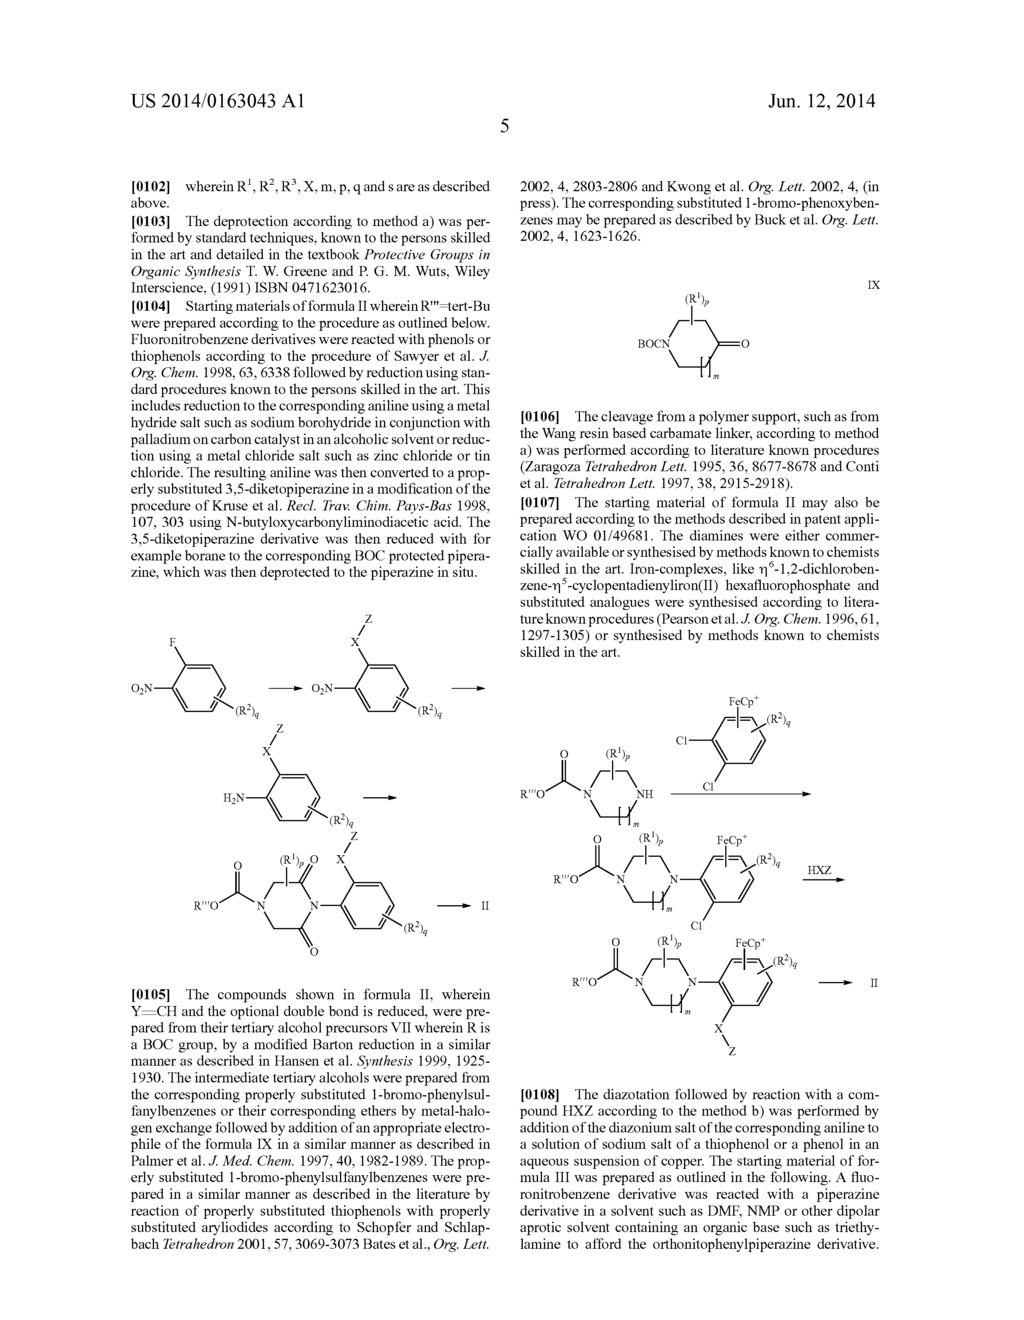 PHENYL-PIPERAZINE DERIVATIVES AS SEROTONIN REUPTAKE INHIBITORS - diagram, schematic, and image 06